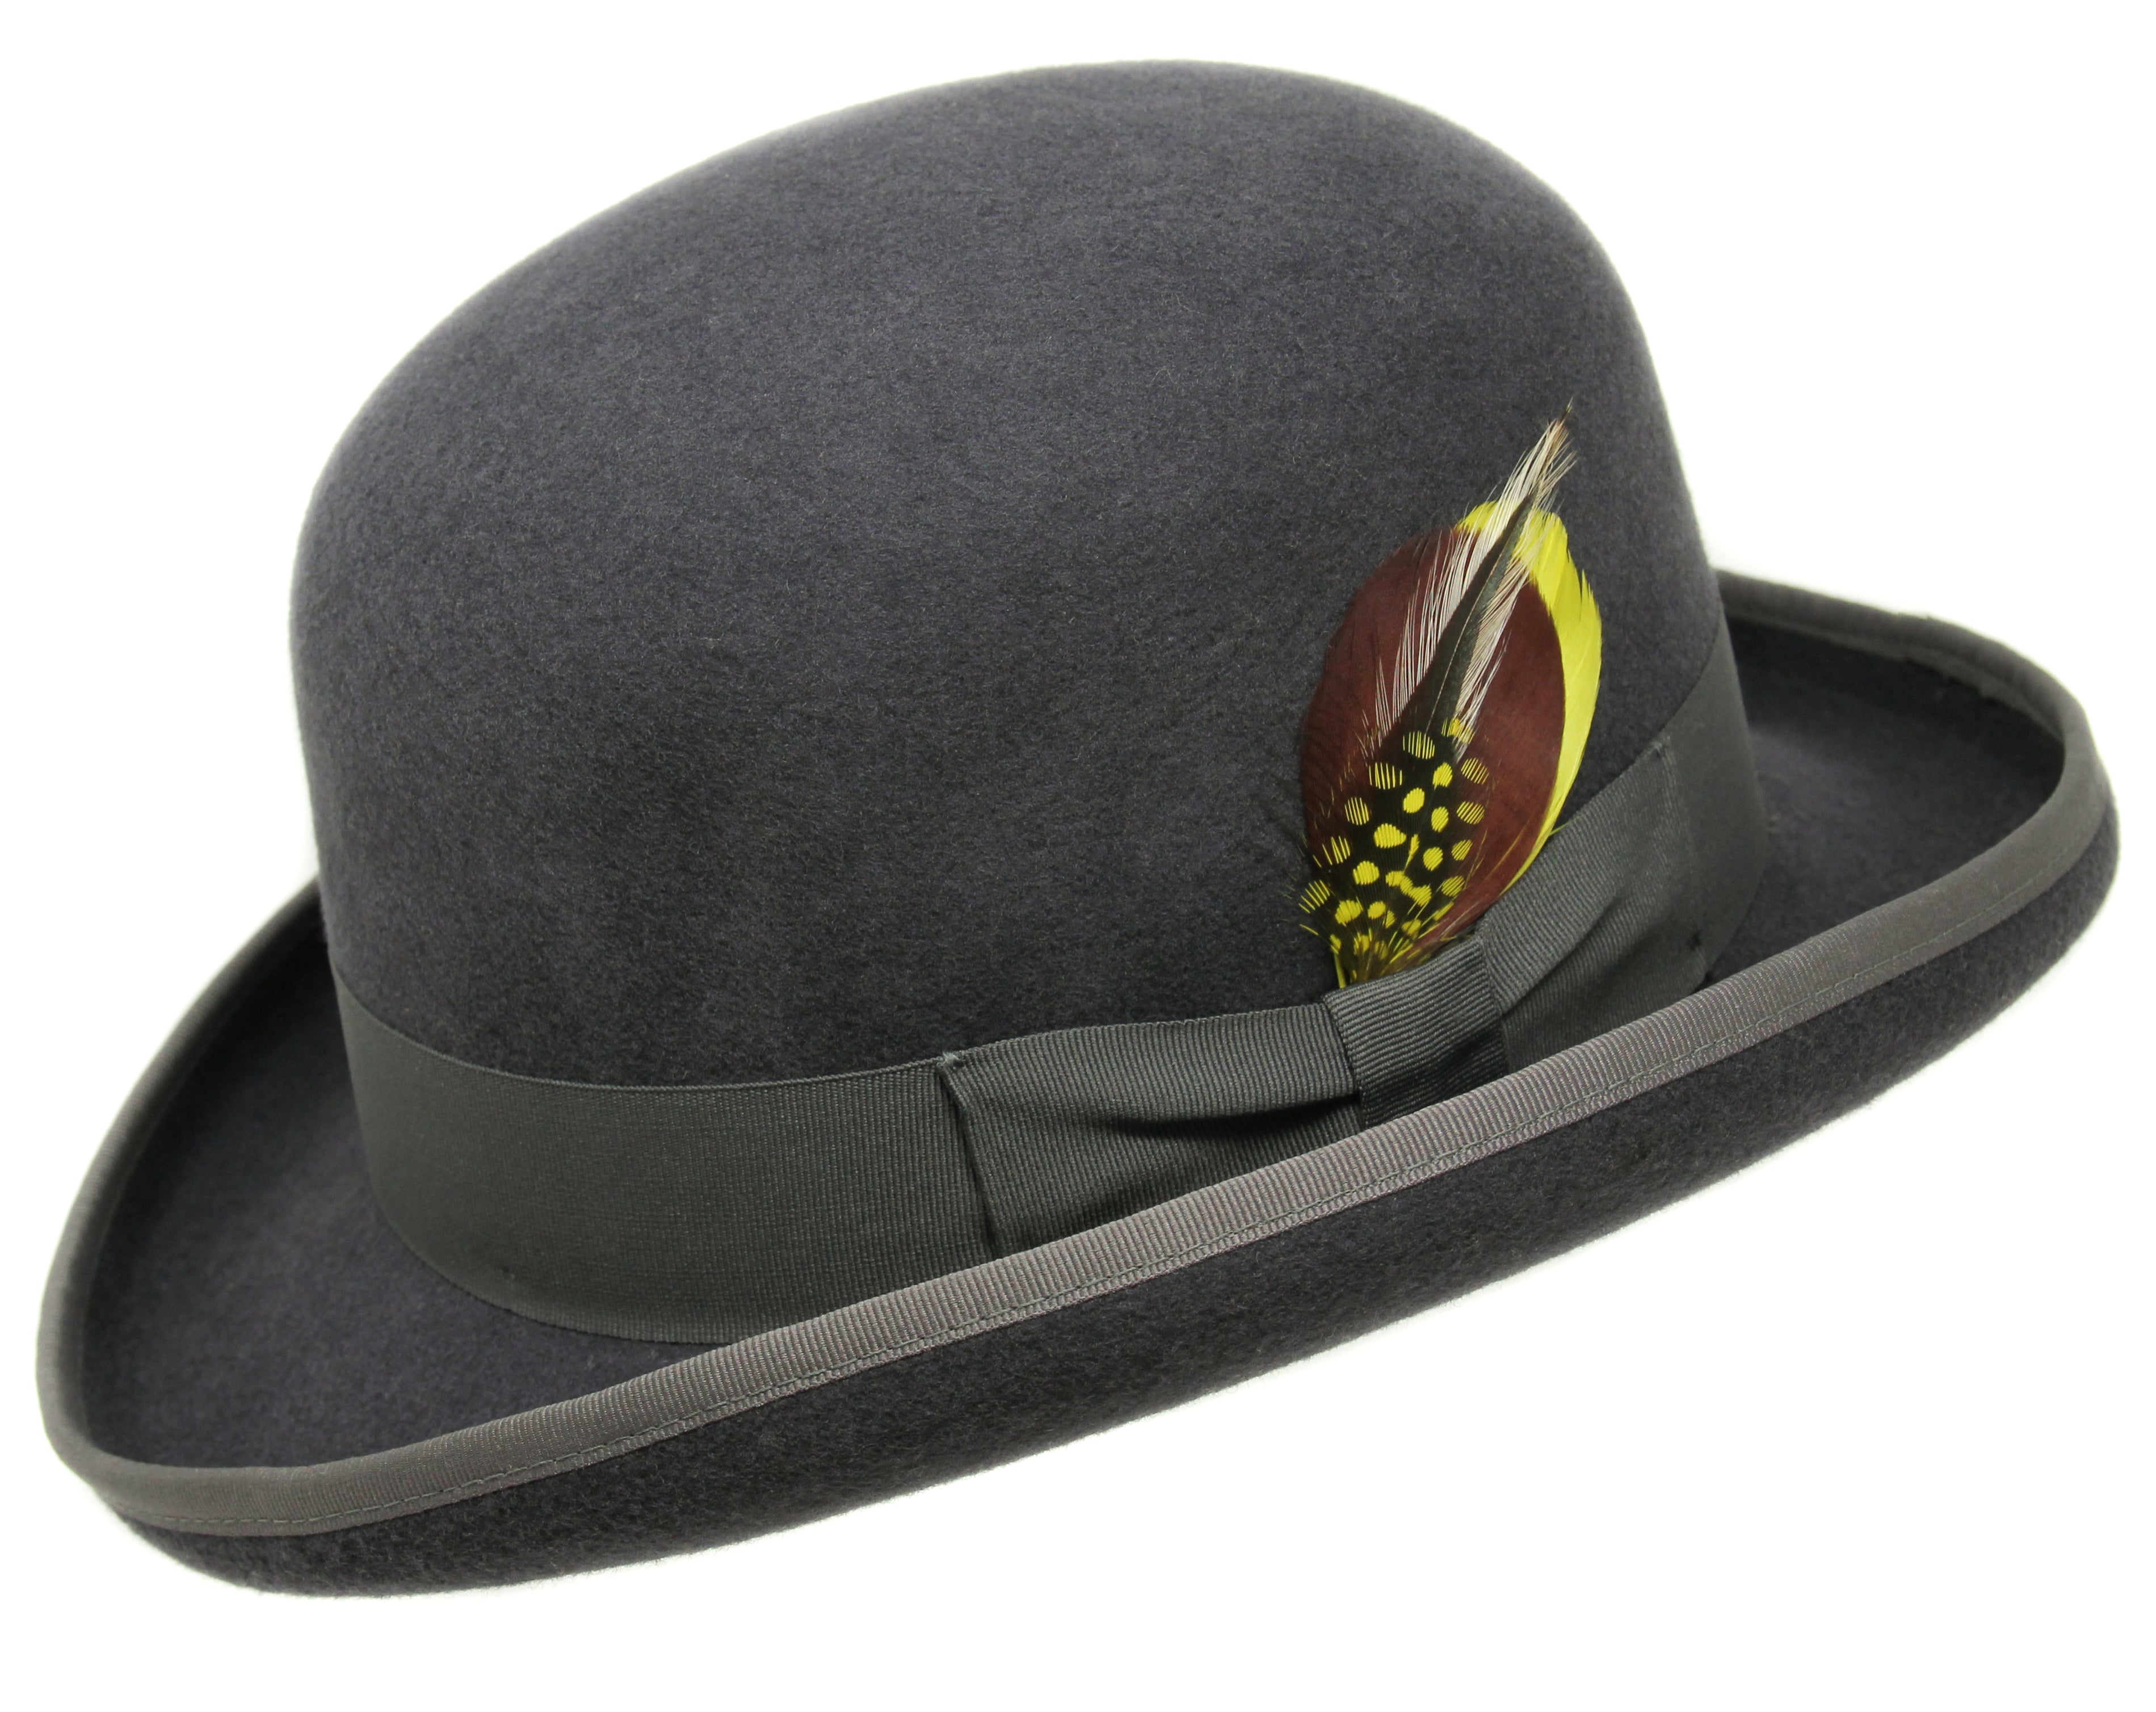 Перевести шляпа. Шапка Чарли Чаплина. Котелок головной убор. Шляпа Боулер. Шляпа Bowler Korea.